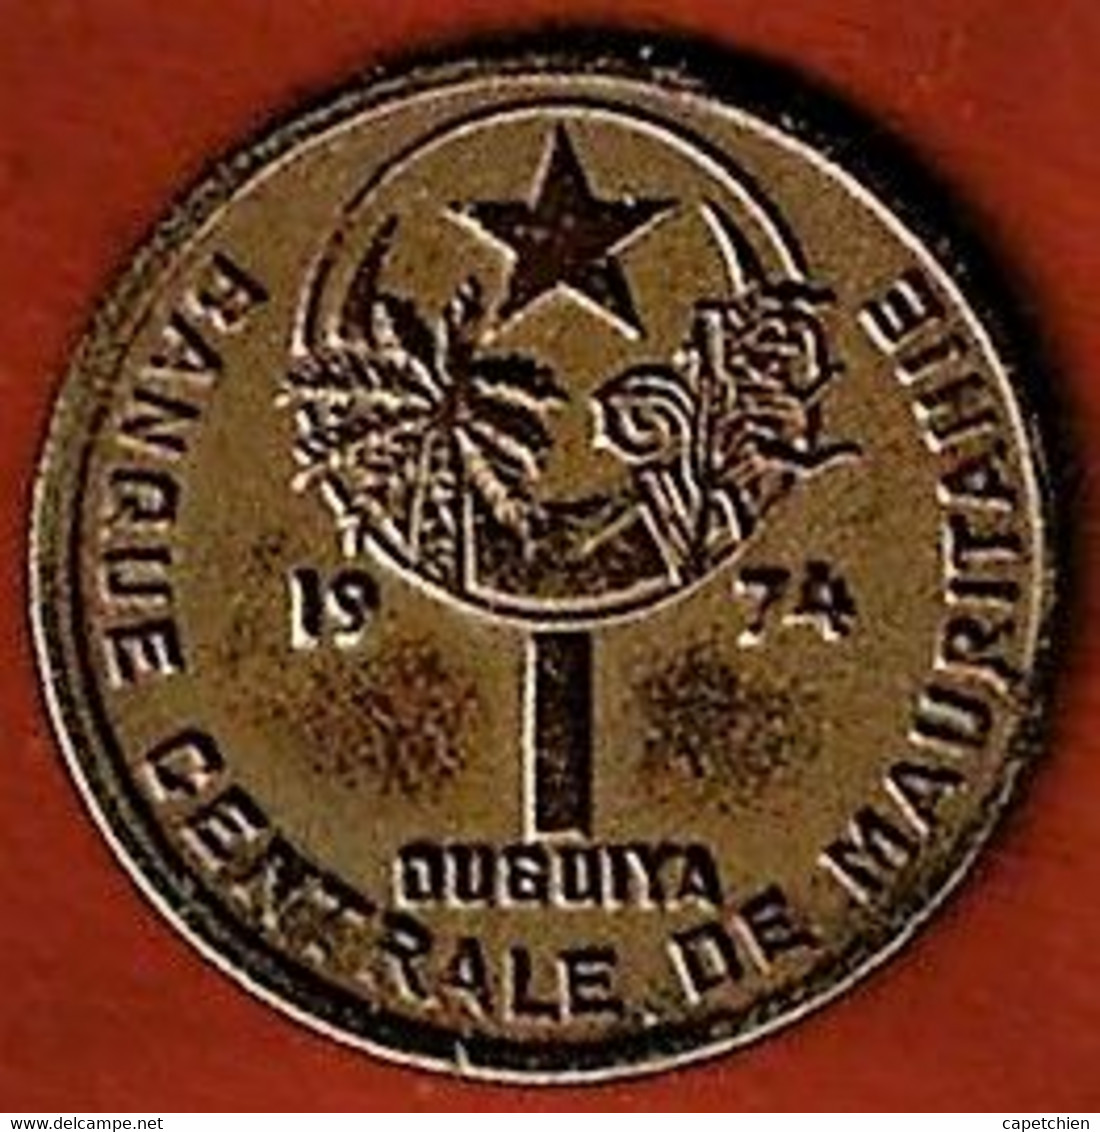 MAURITANIE / 1 OUGUIYA / 1974 - Mauritania